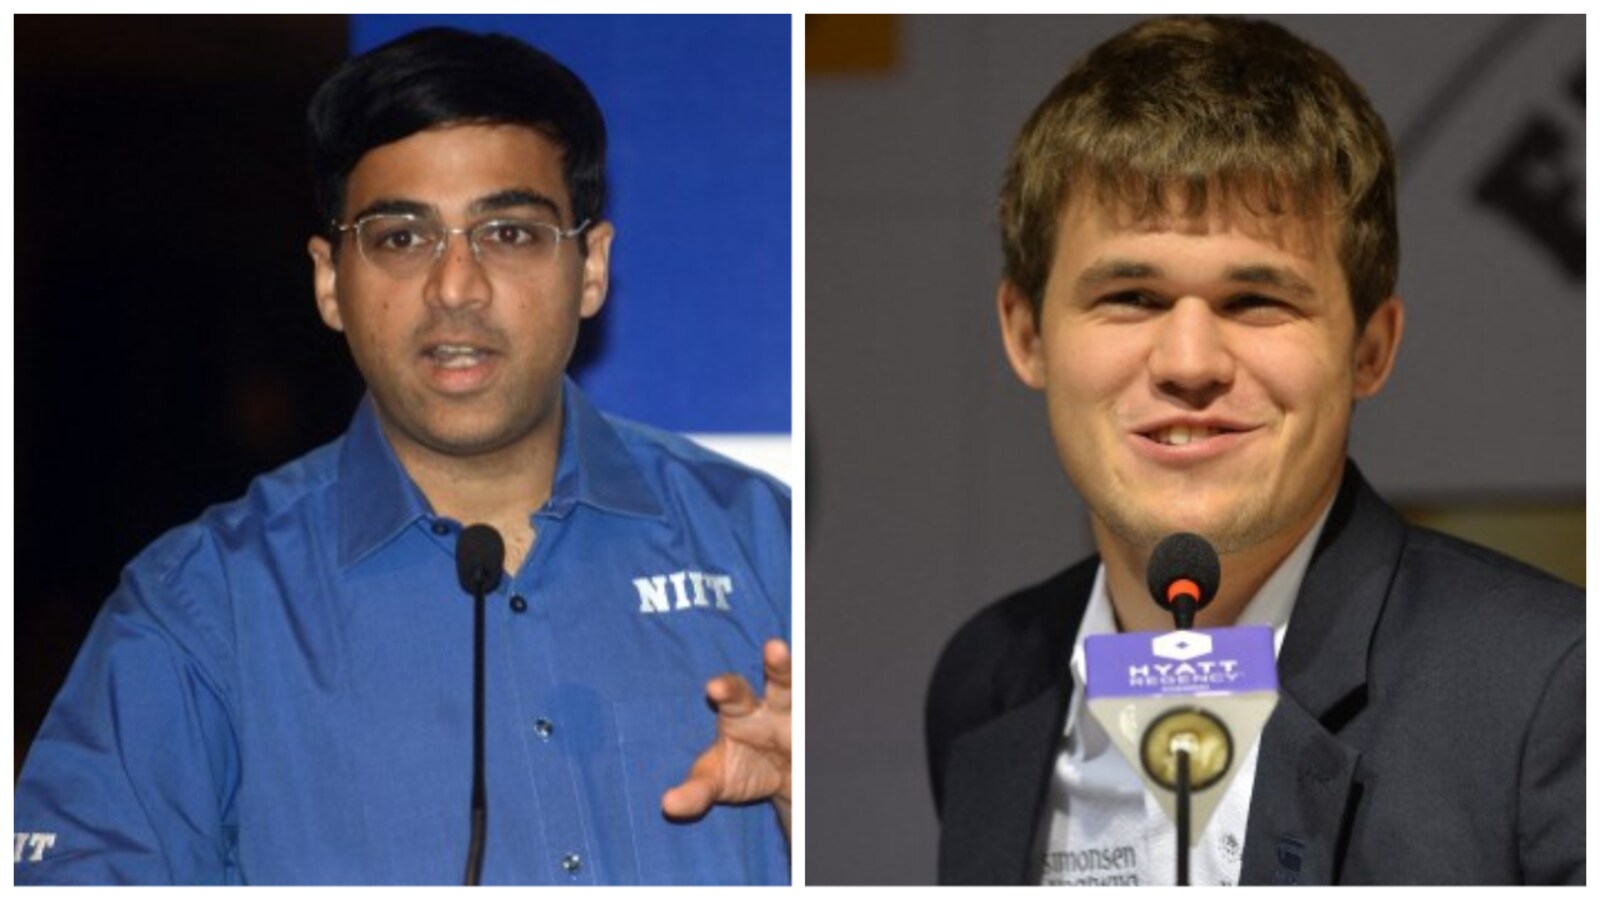 Viswanathan Anand Beats Magnus Carlsen Ahead of Norway Chess Tournament